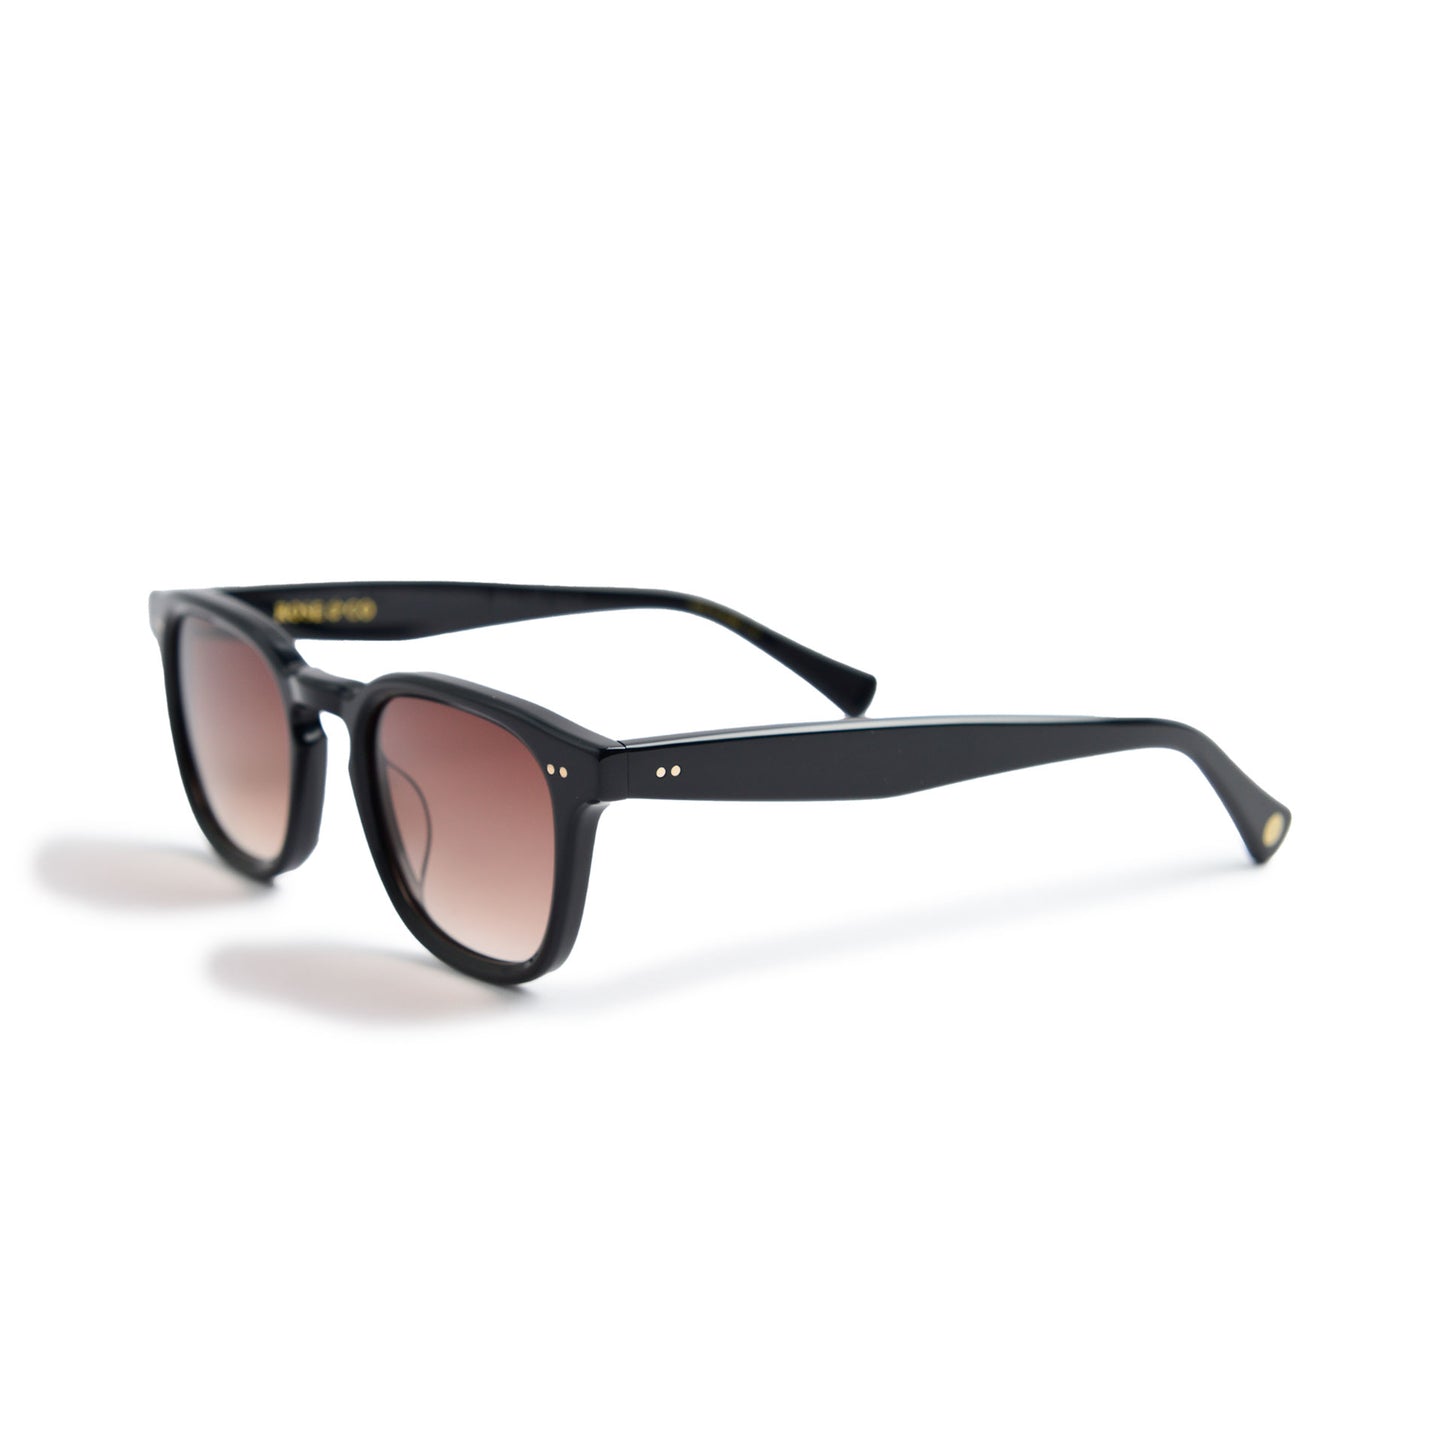 Rose & Co. A6 Sunglasses